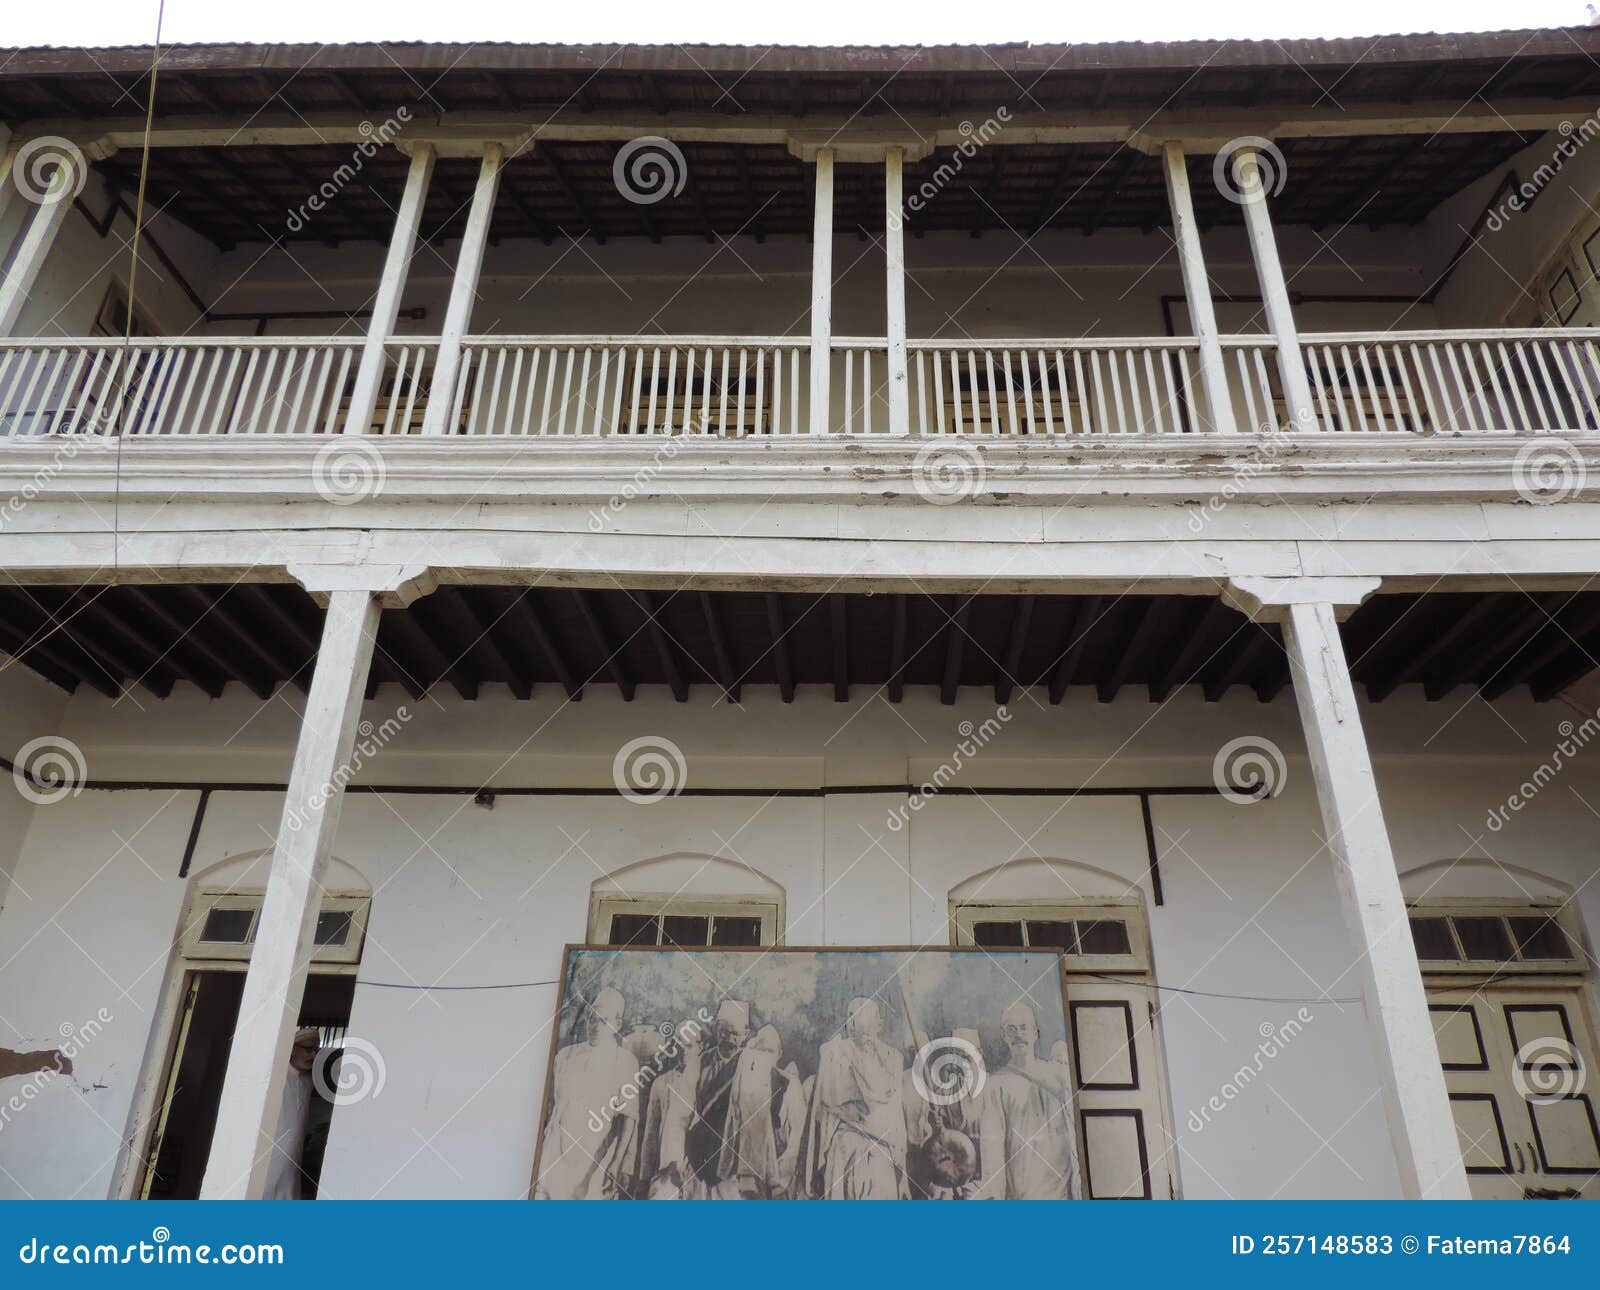 saifee villa gandhi memorial museum - india freedom movement - dandi march - historical site